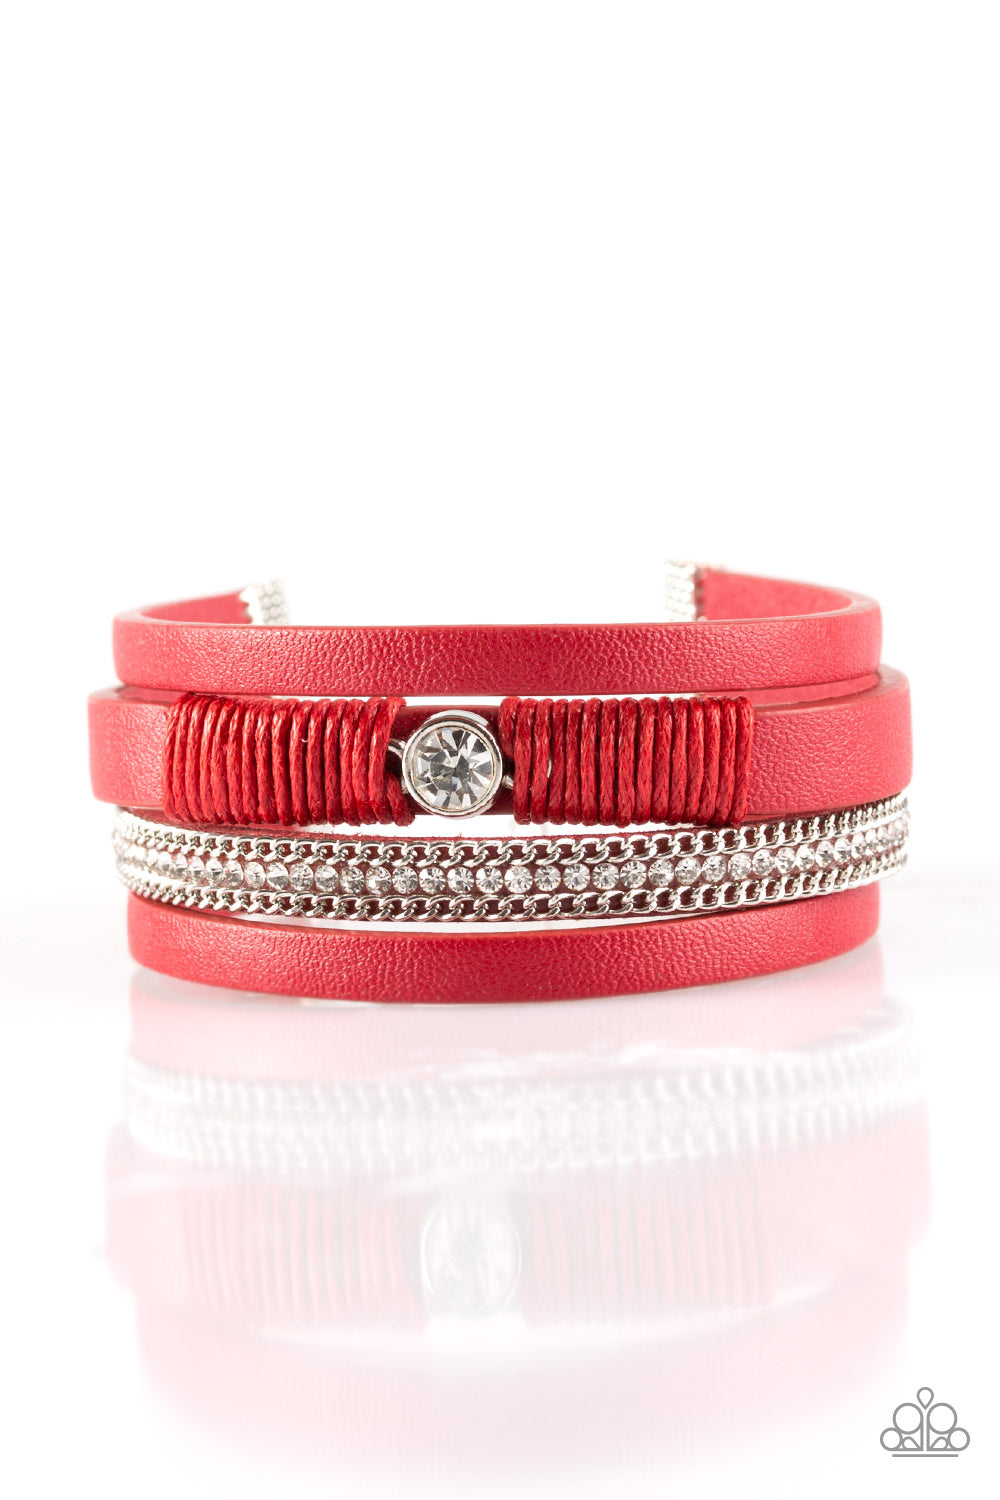 . Catwalk Craze - Red Urban Bracelet